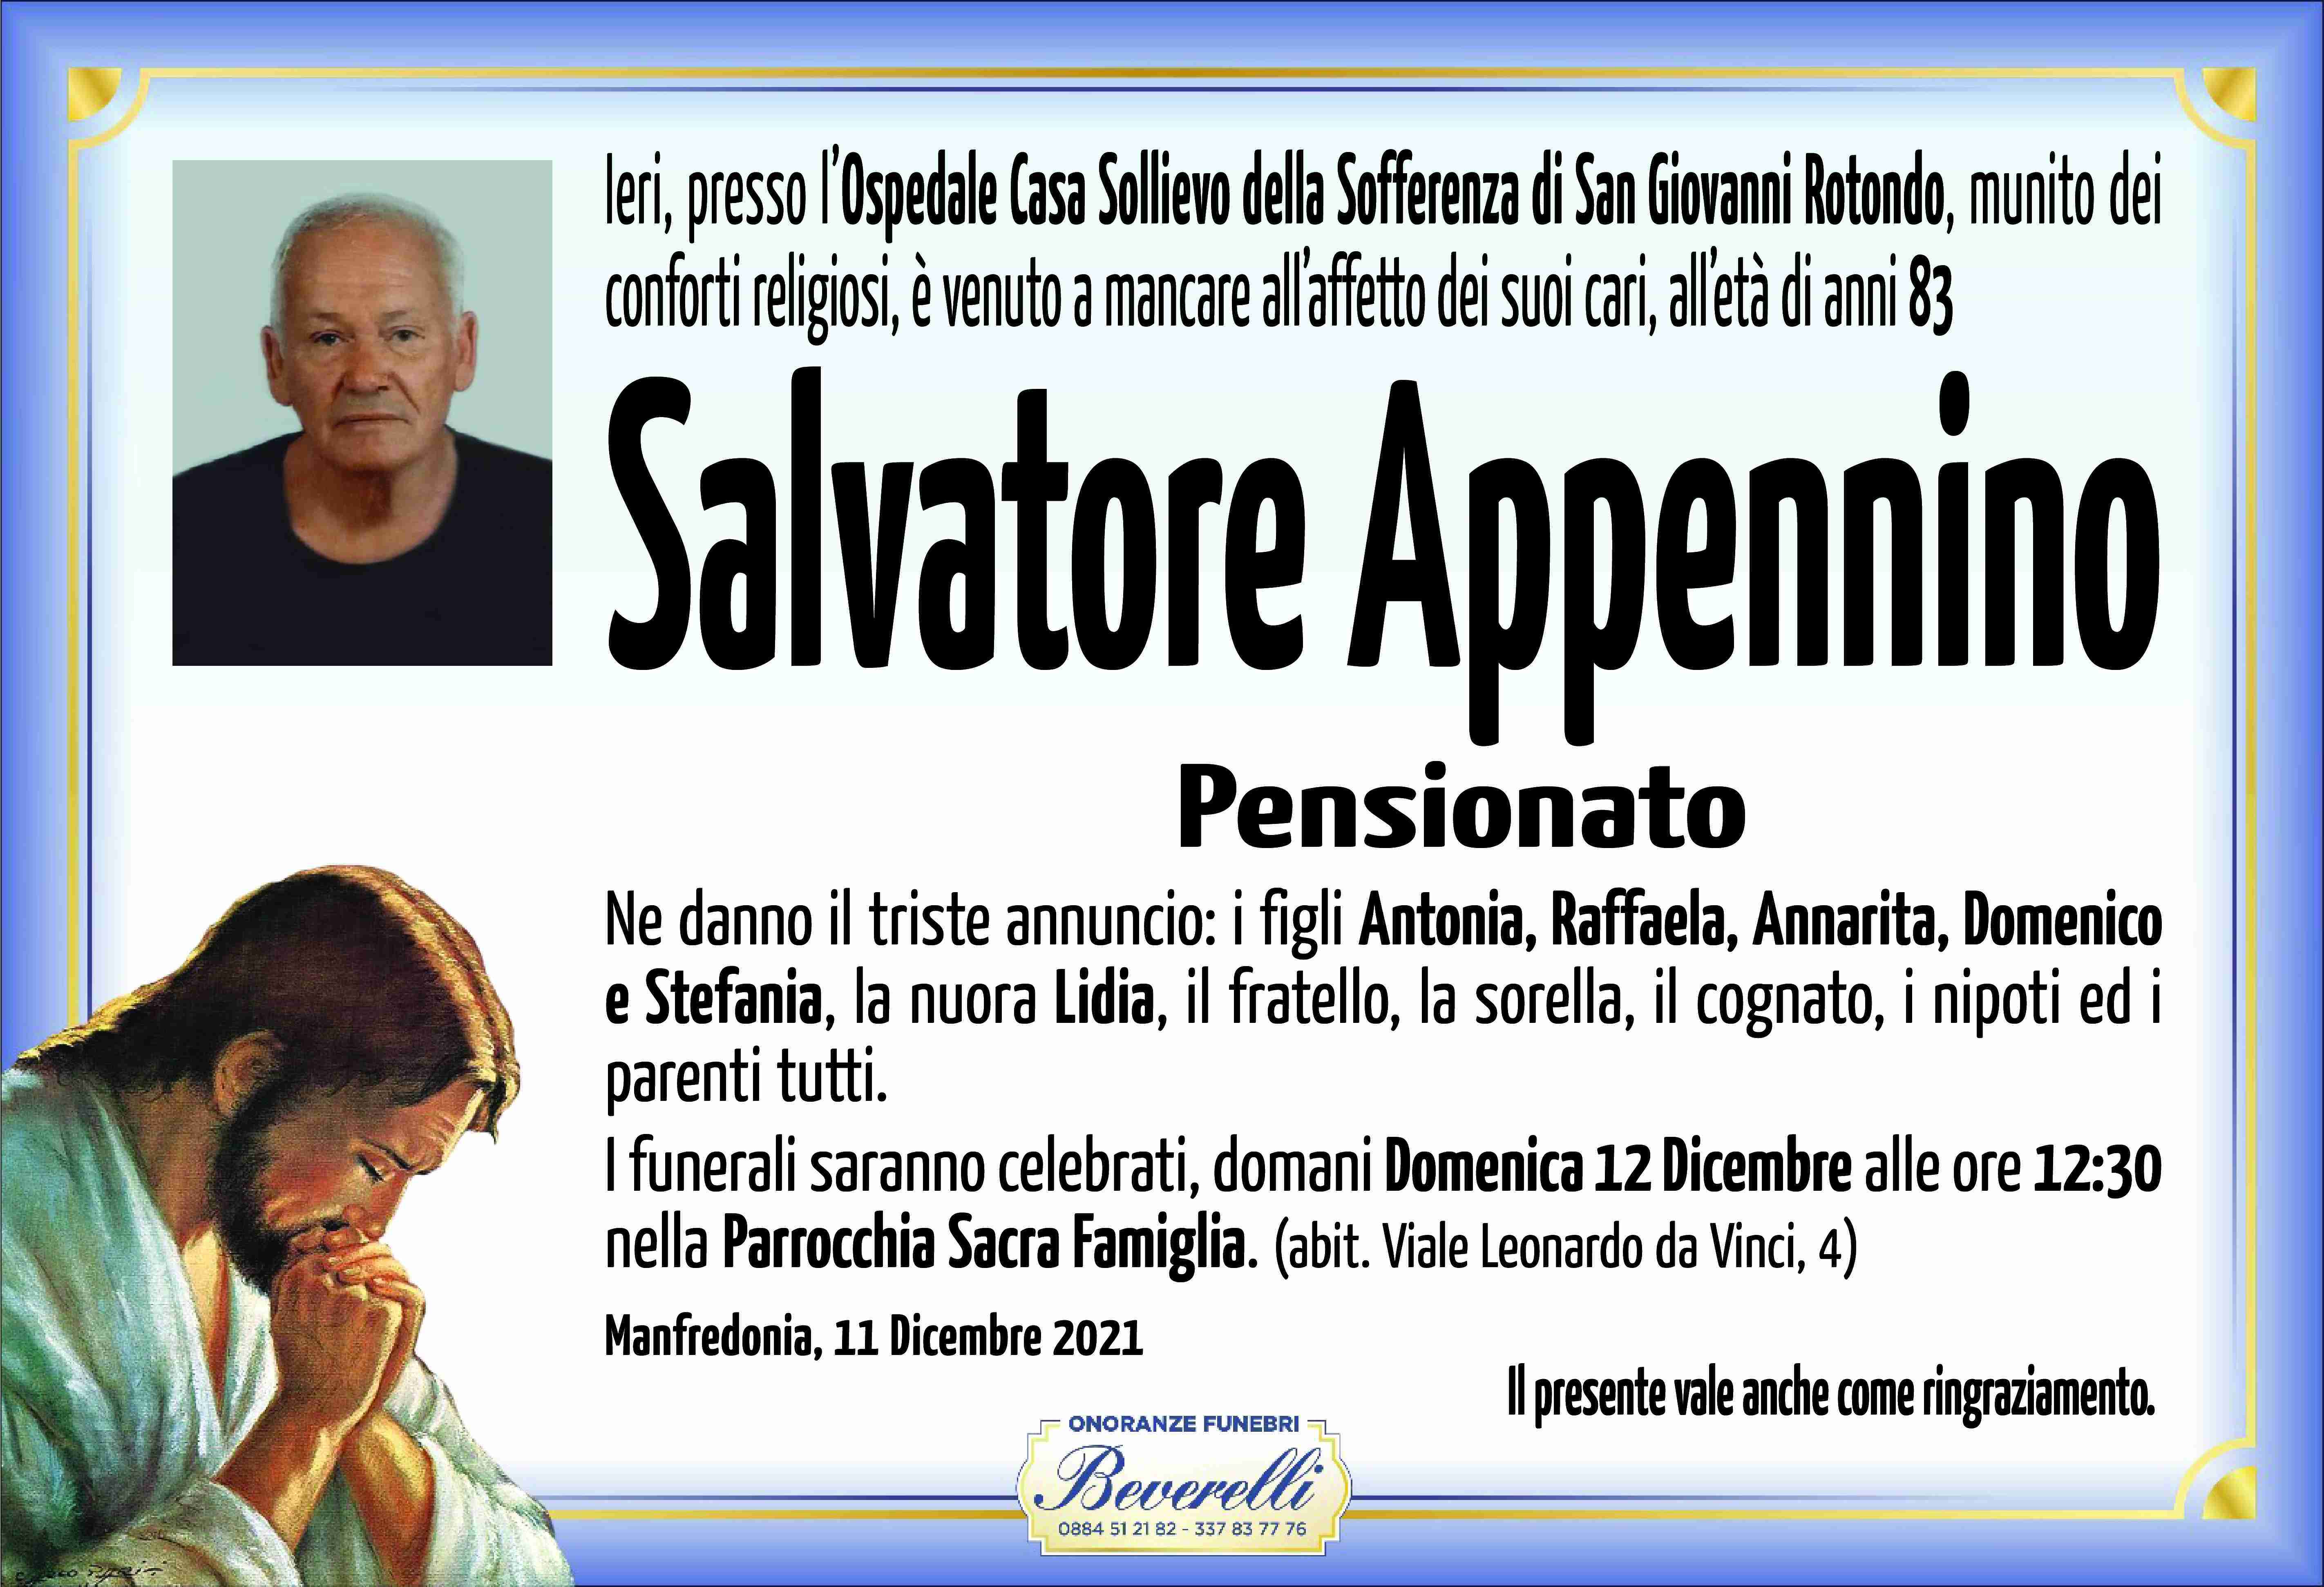 Salvatore Appennino